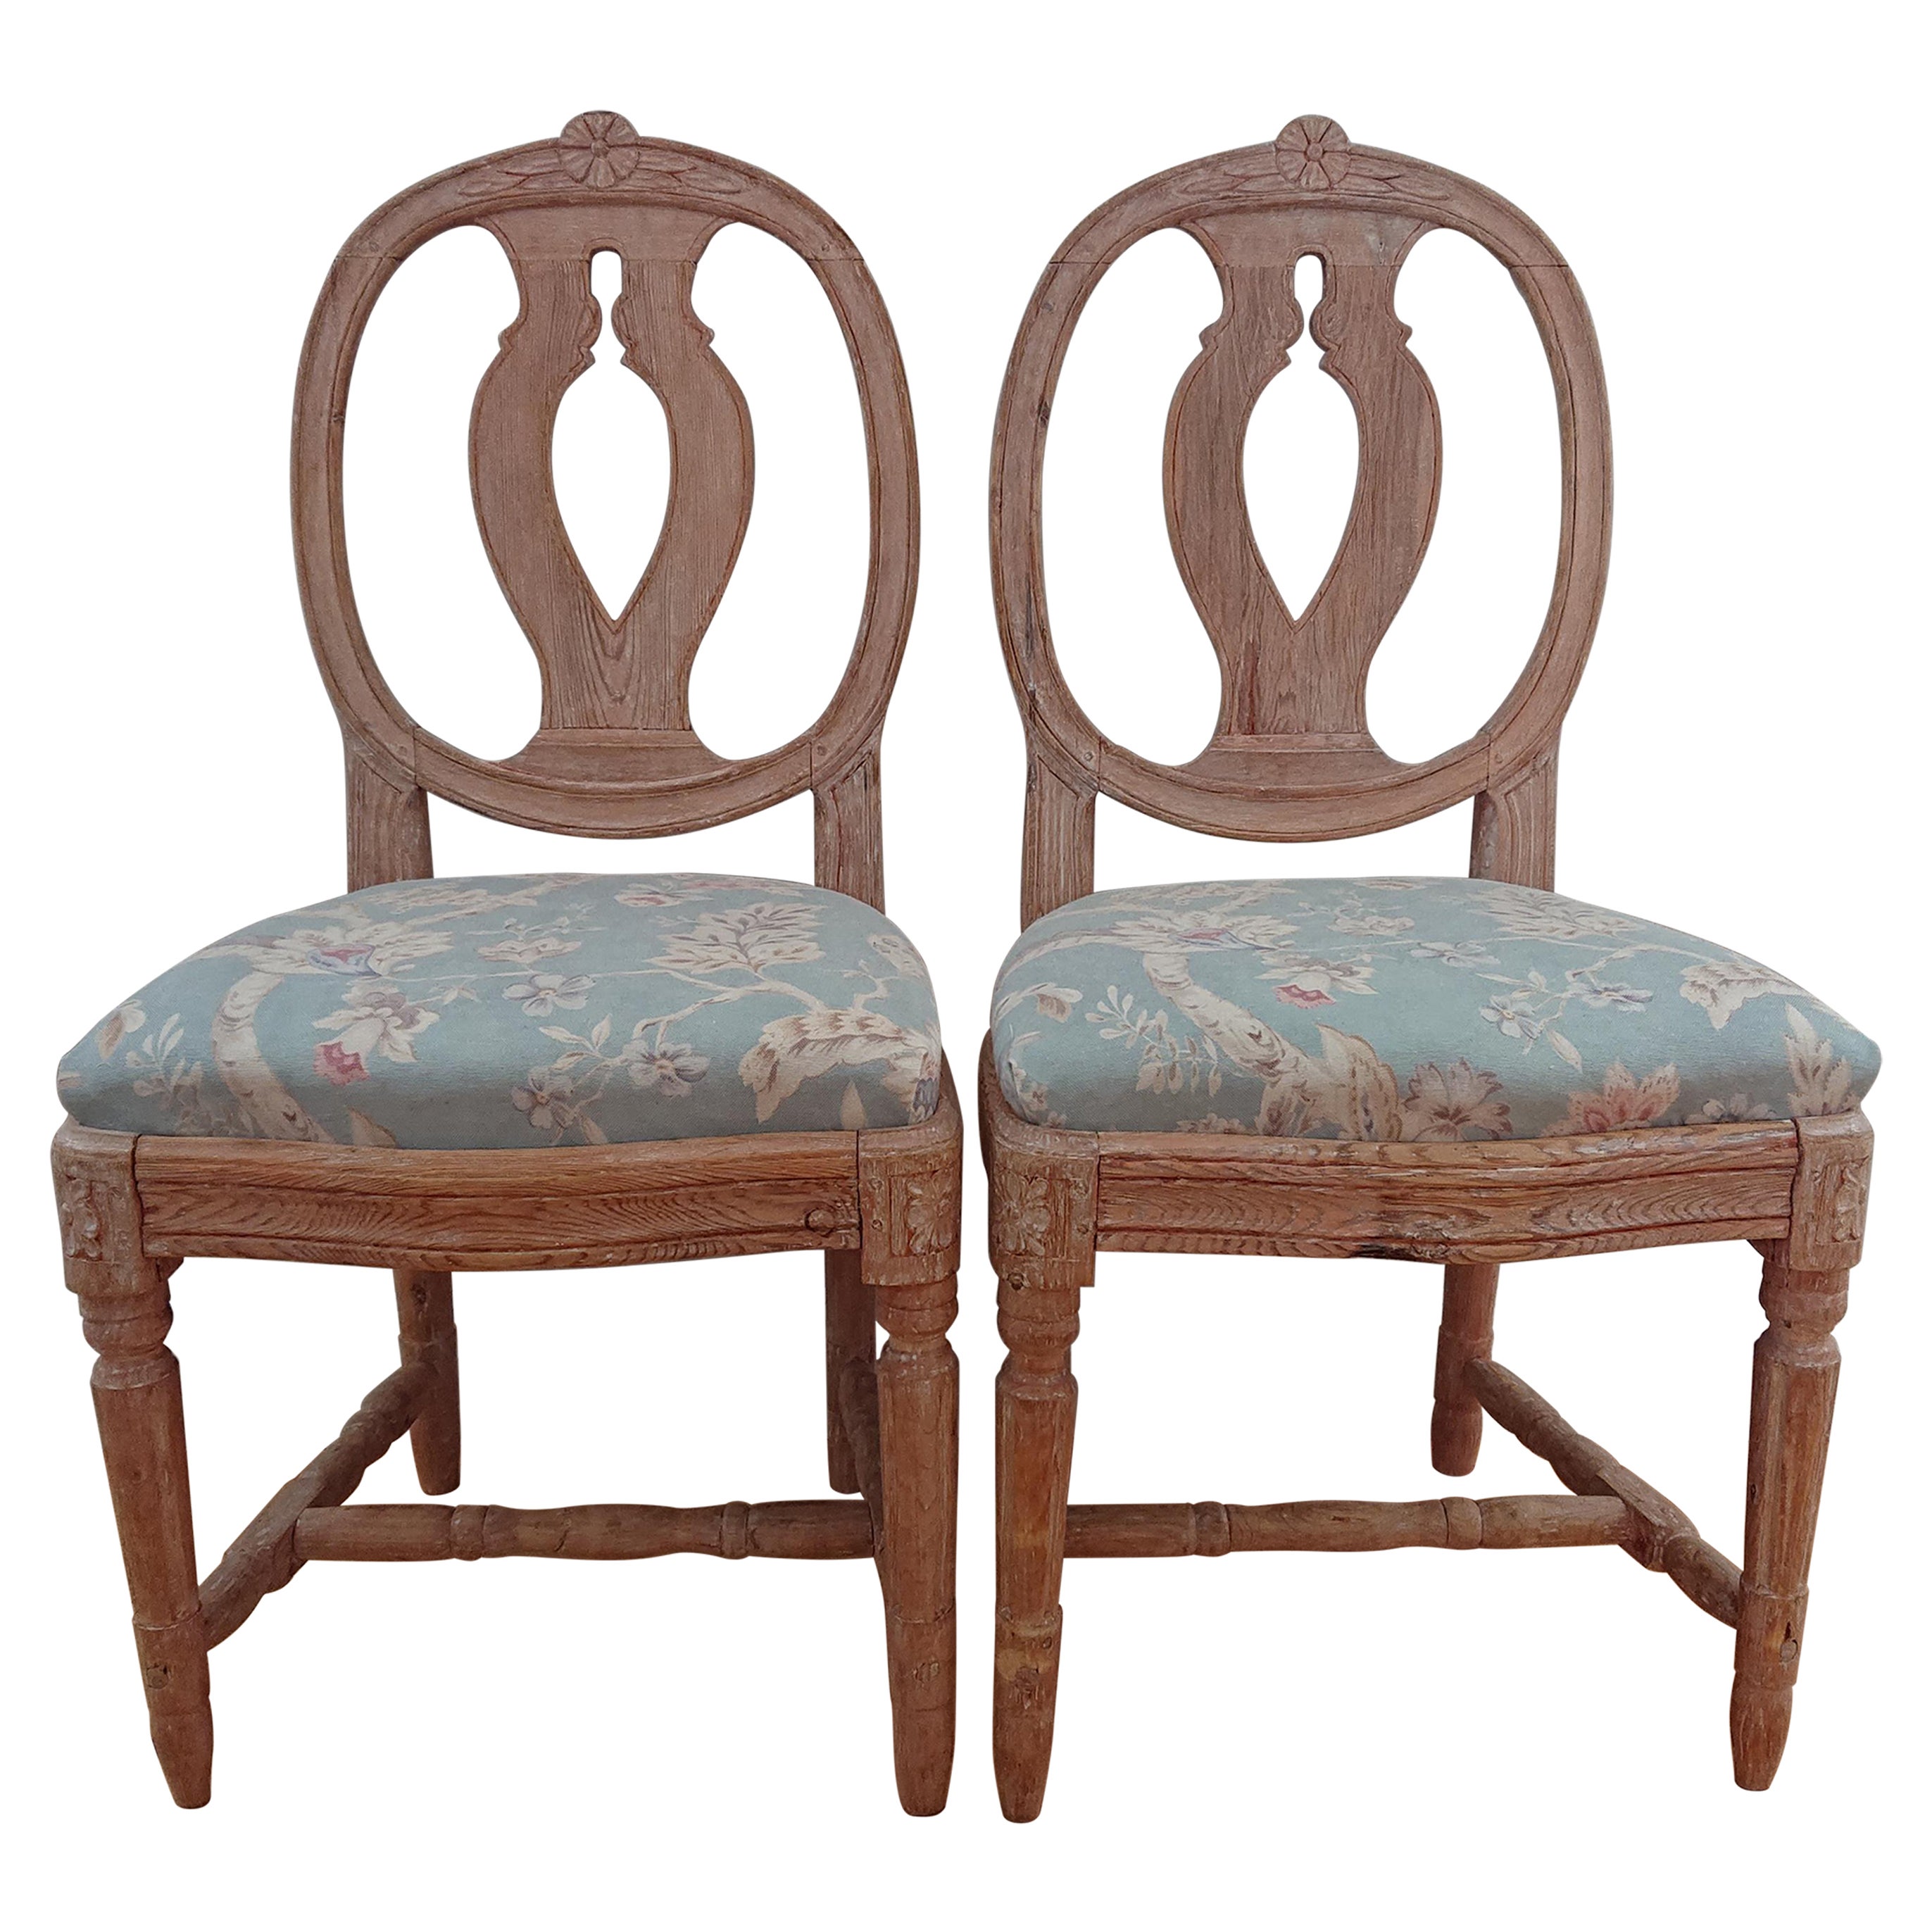 Pair of Early 19th Century Swedish Gustavian Chairs "The Swedish Model"